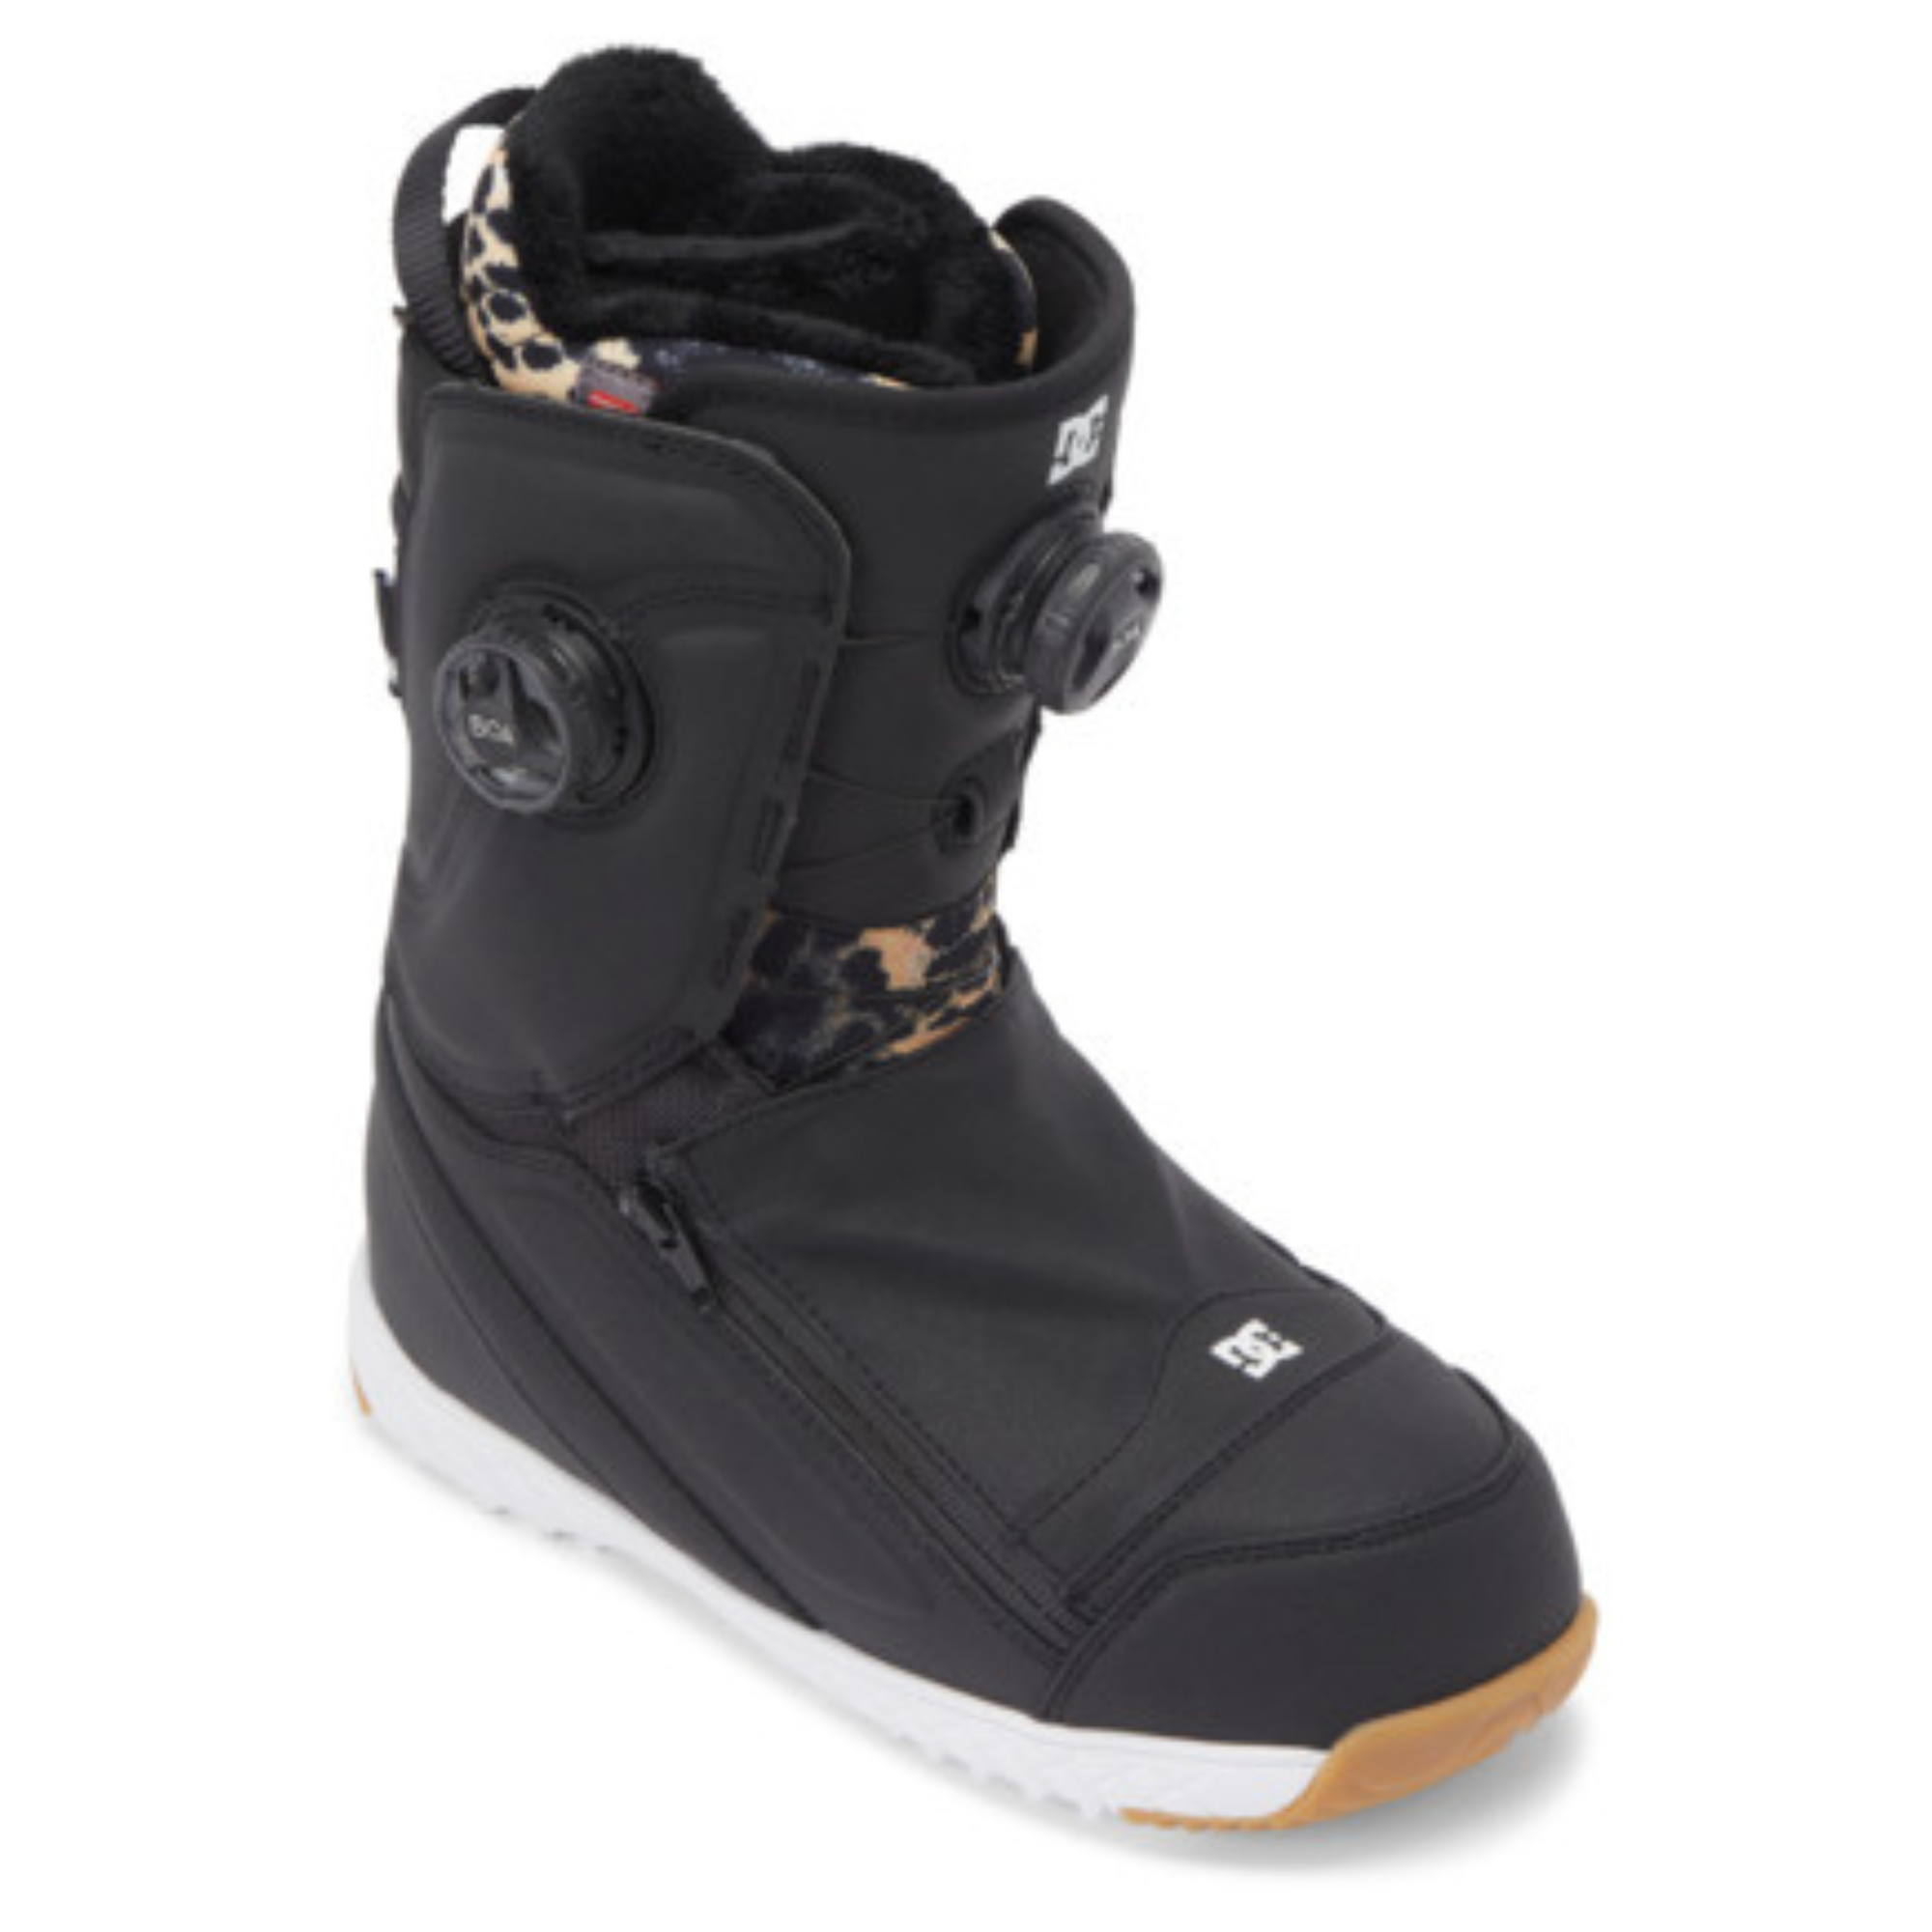 DC Women's Mora Snowboard Boots - Black/Leo